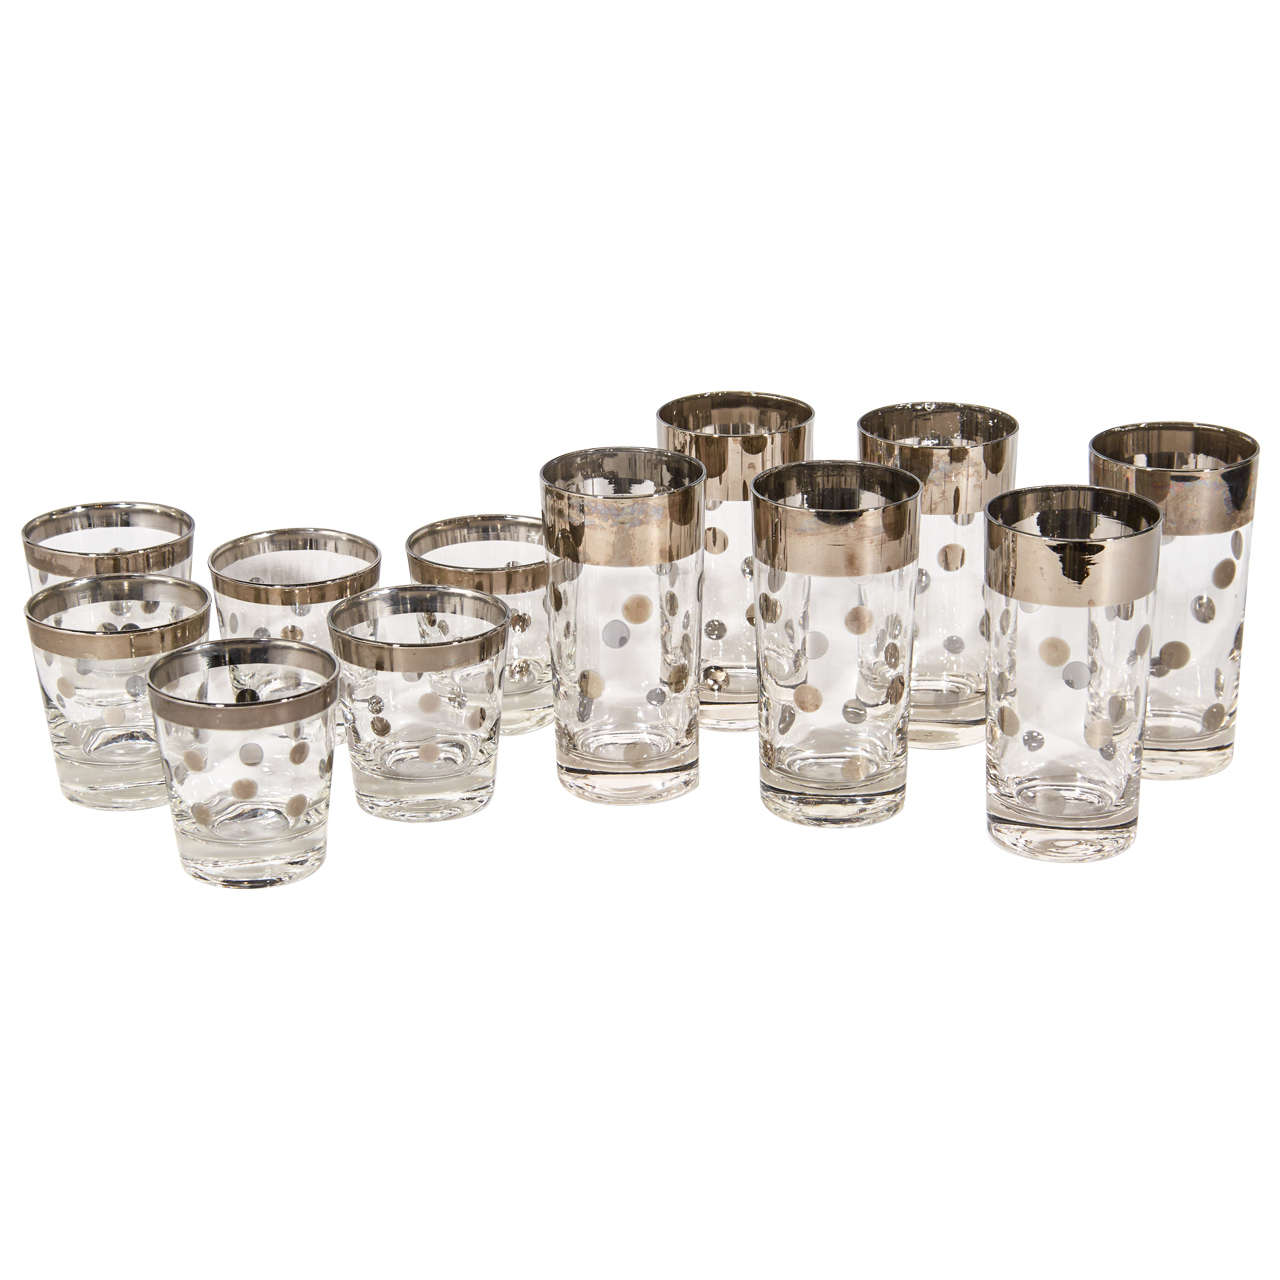 Set of Twelve Dorothy Thorpe Barware Glasses with Polka Dot Design